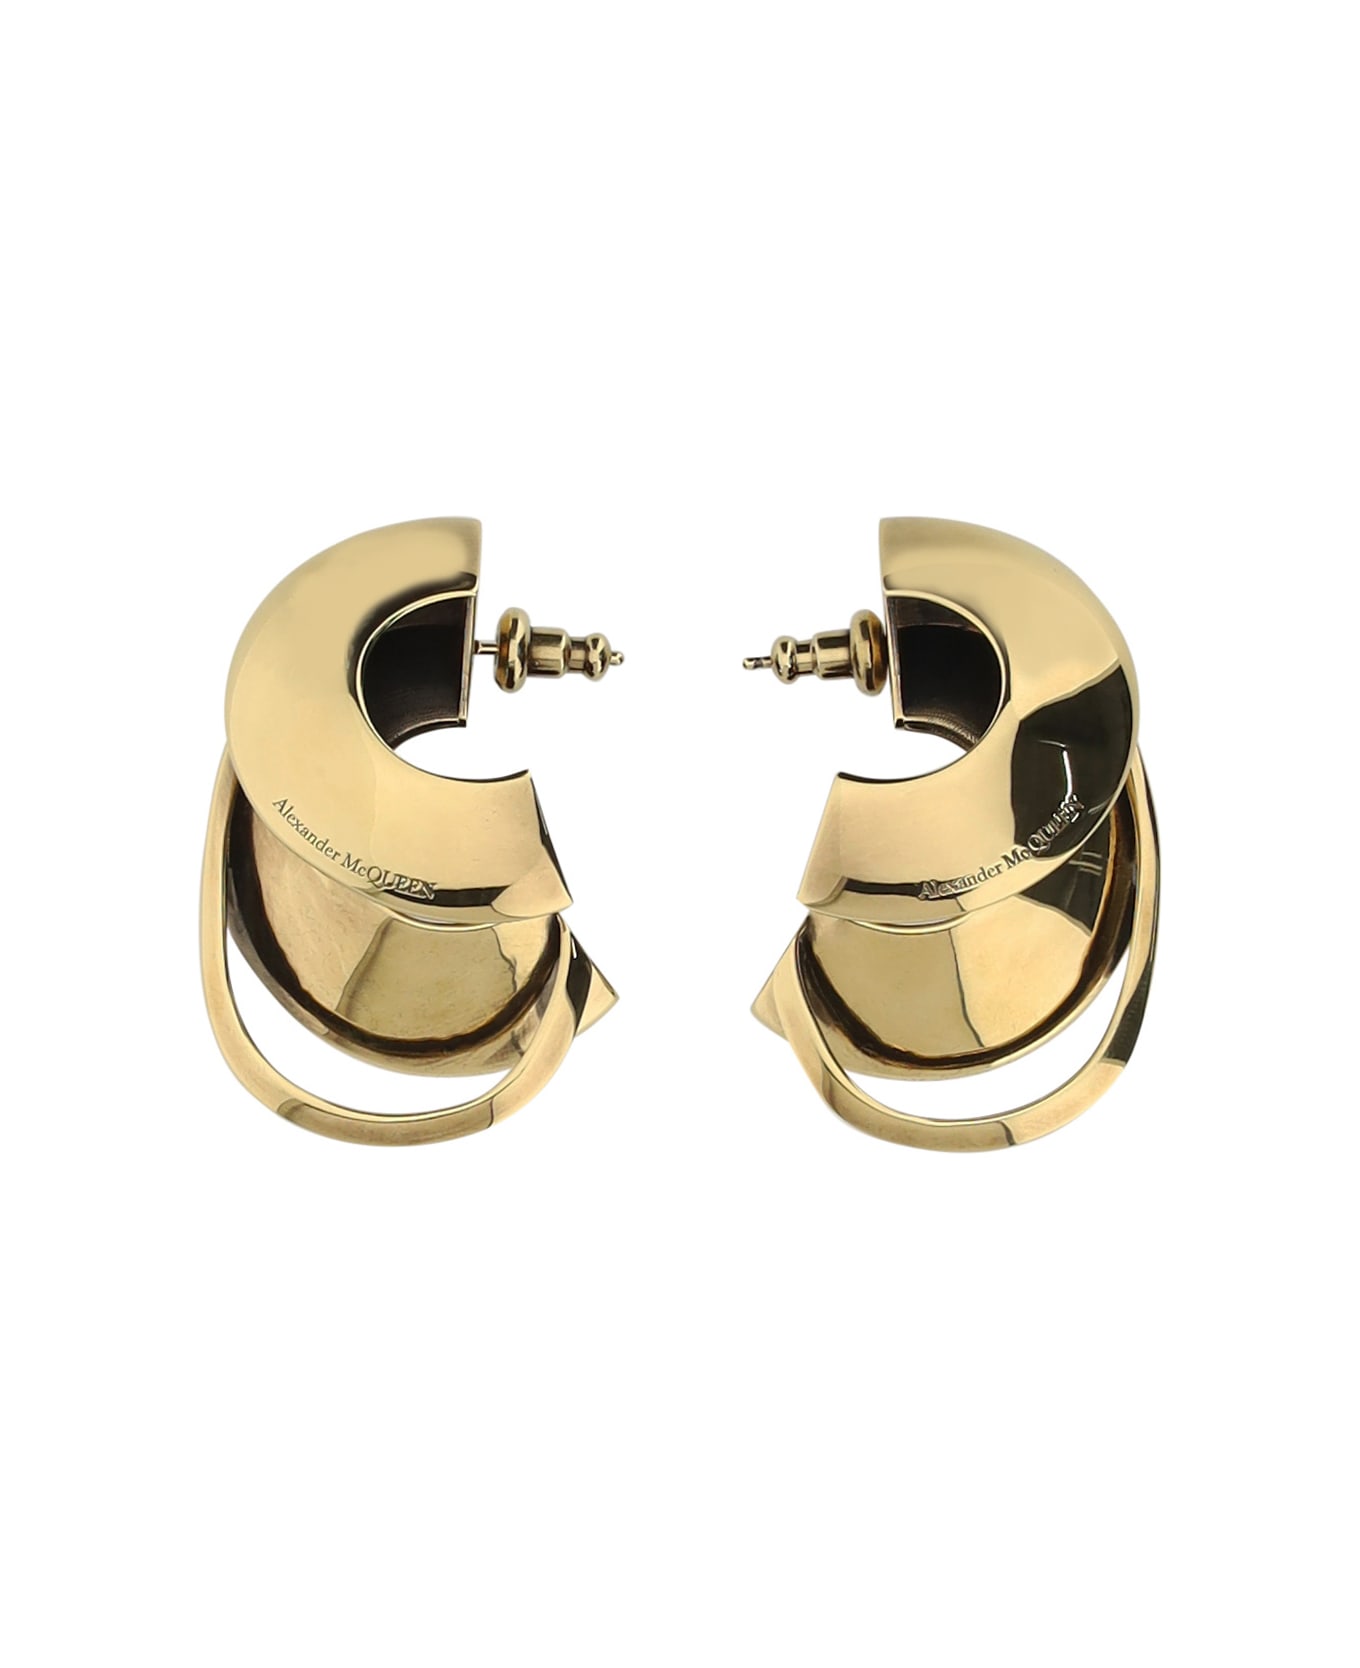 Alexander McQueen Earrings - Oro イヤリング